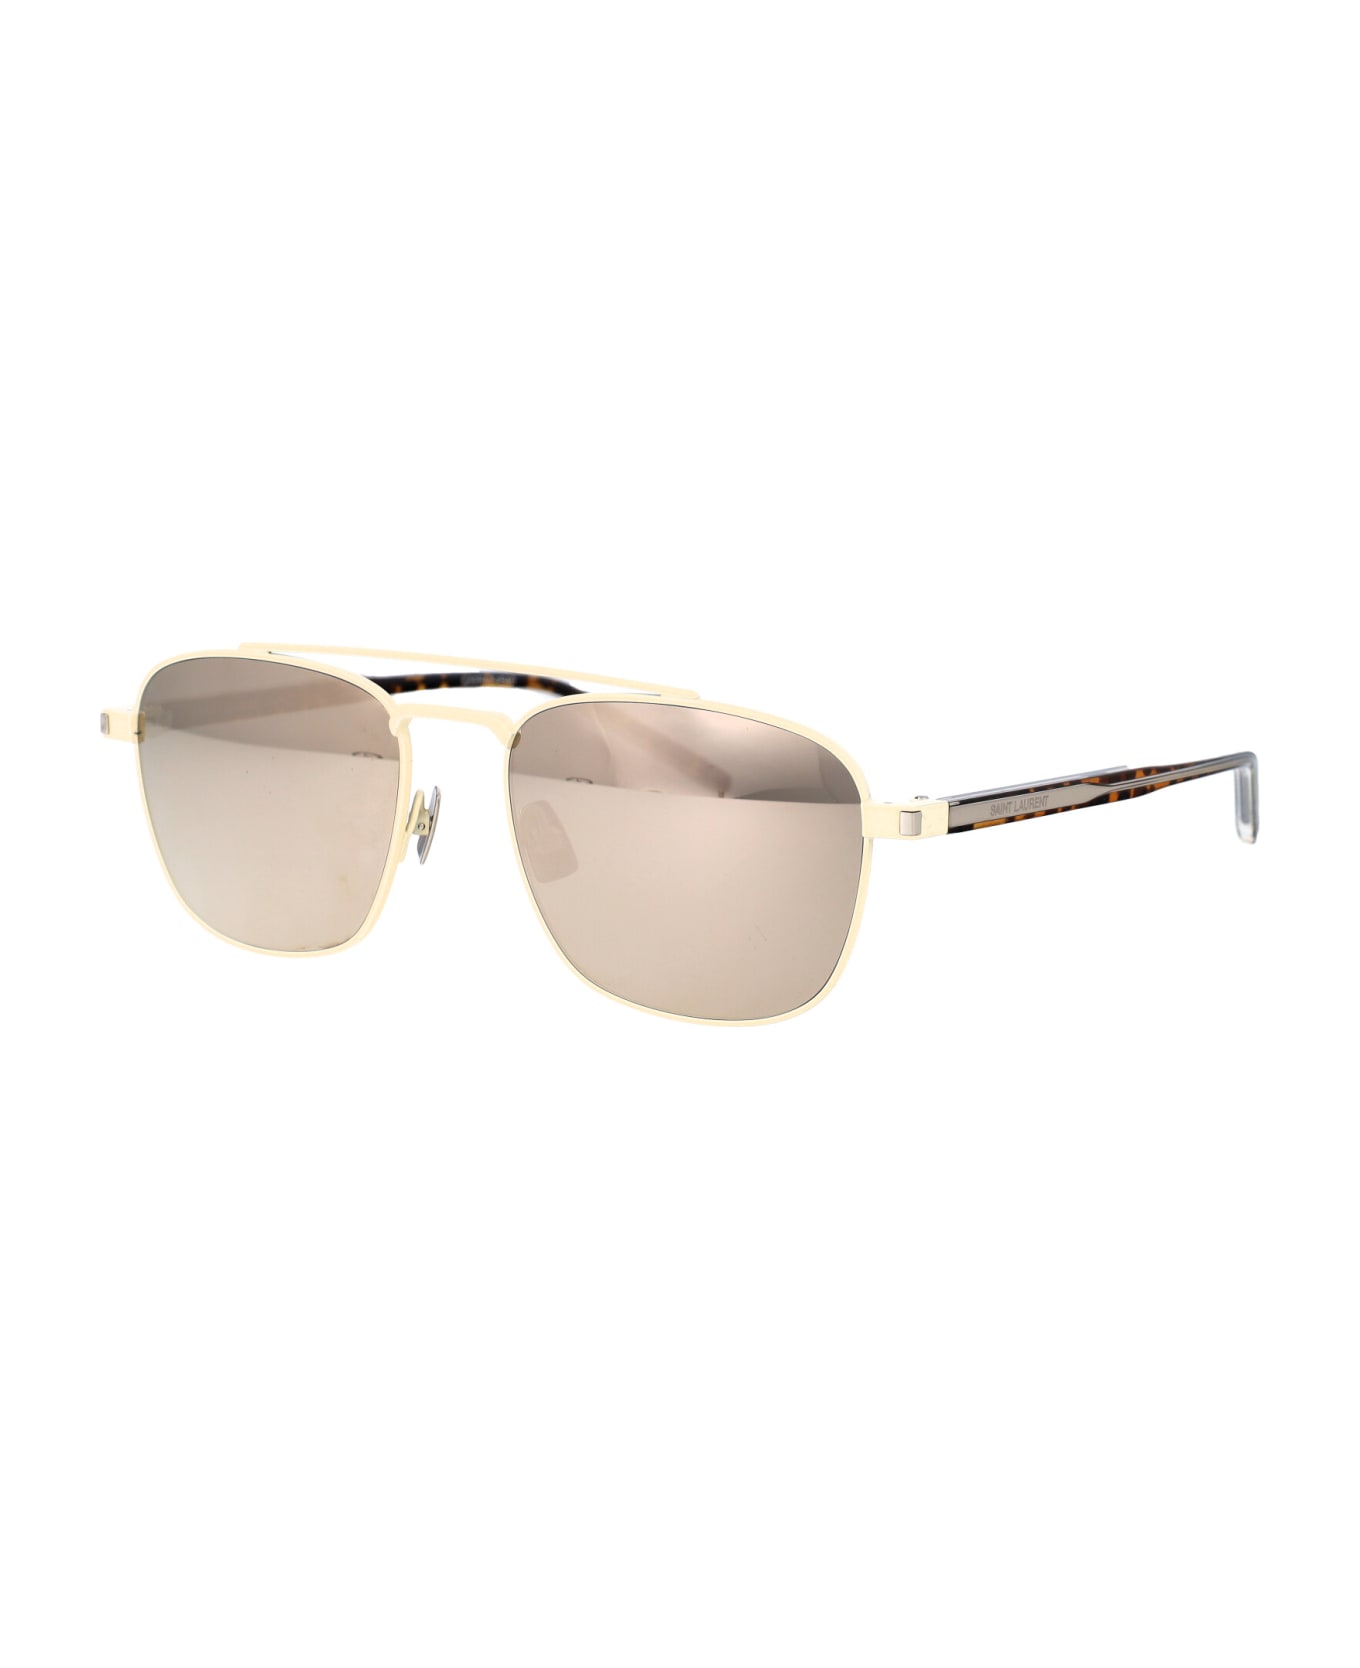 Saint Laurent Eyewear Sl 665 Sunglasses - 005 IVORY CRYSTAL WHITE